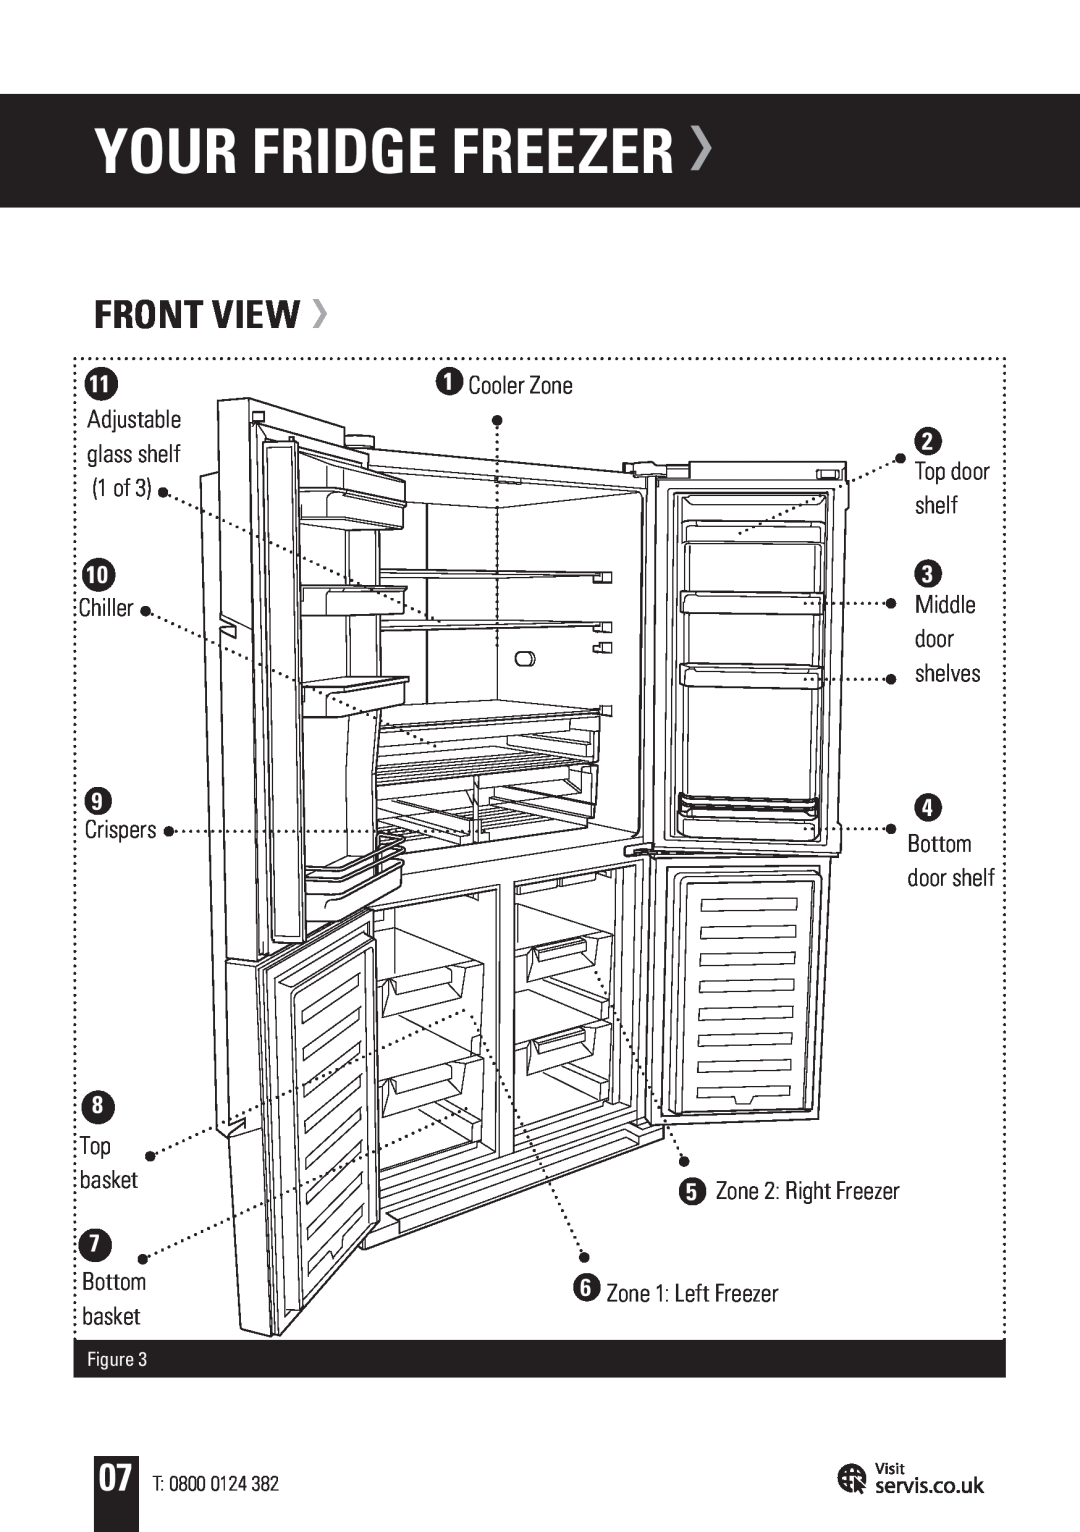 Servis FD91185SS user manual Your Fridge Freezer, Front View, Cooler Zone, Middle door shelves, Zone 2 Right Freezer 